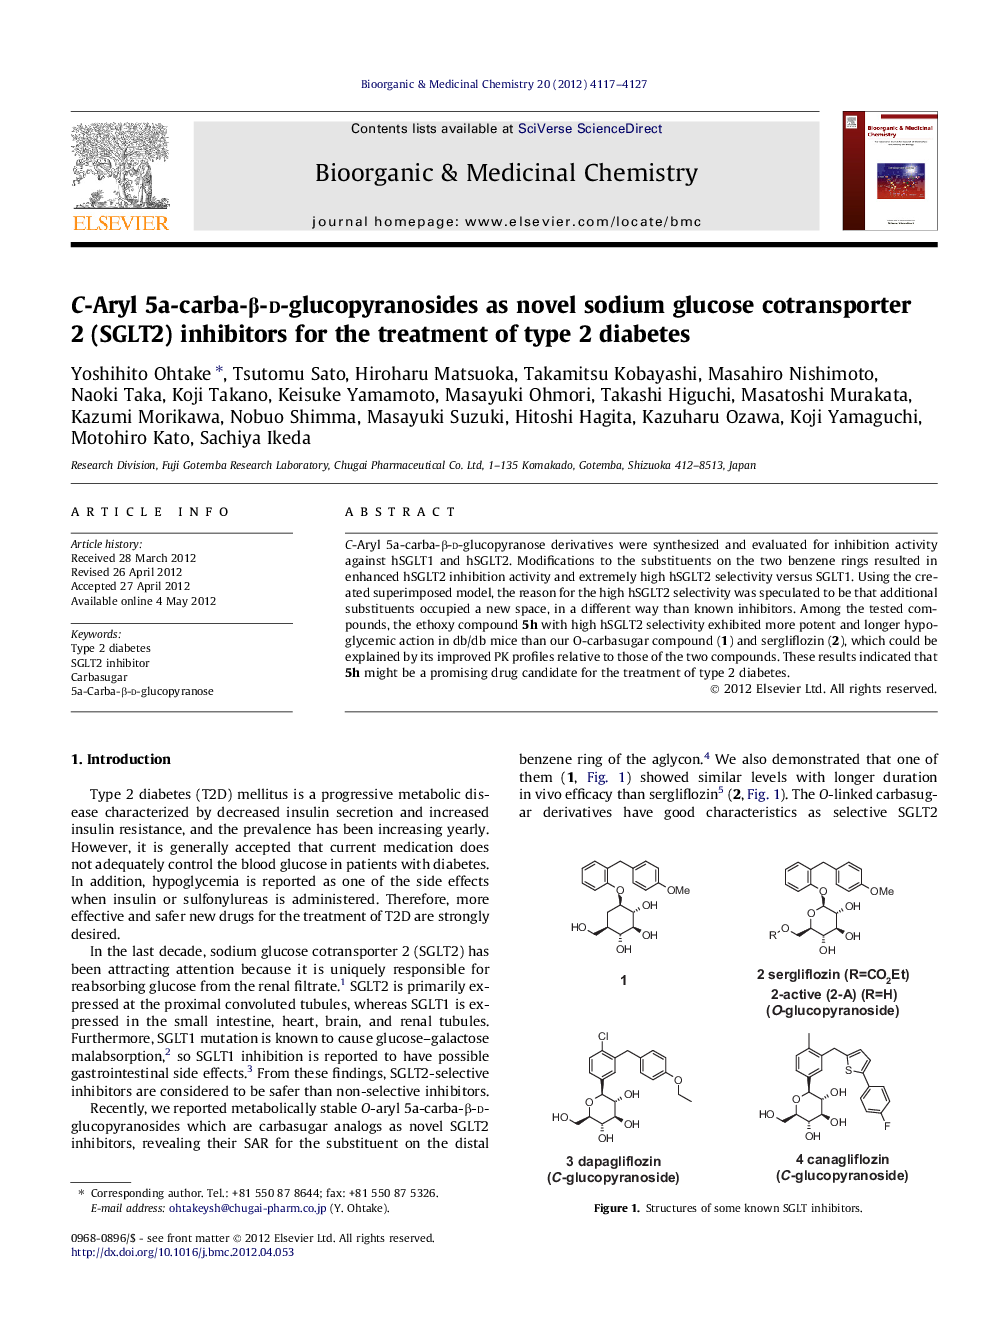 C-Aryl 5a-carba-β-d-glucopyranosides as novel sodium glucose cotransporter 2 (SGLT2) inhibitors for the treatment of type 2 diabetes